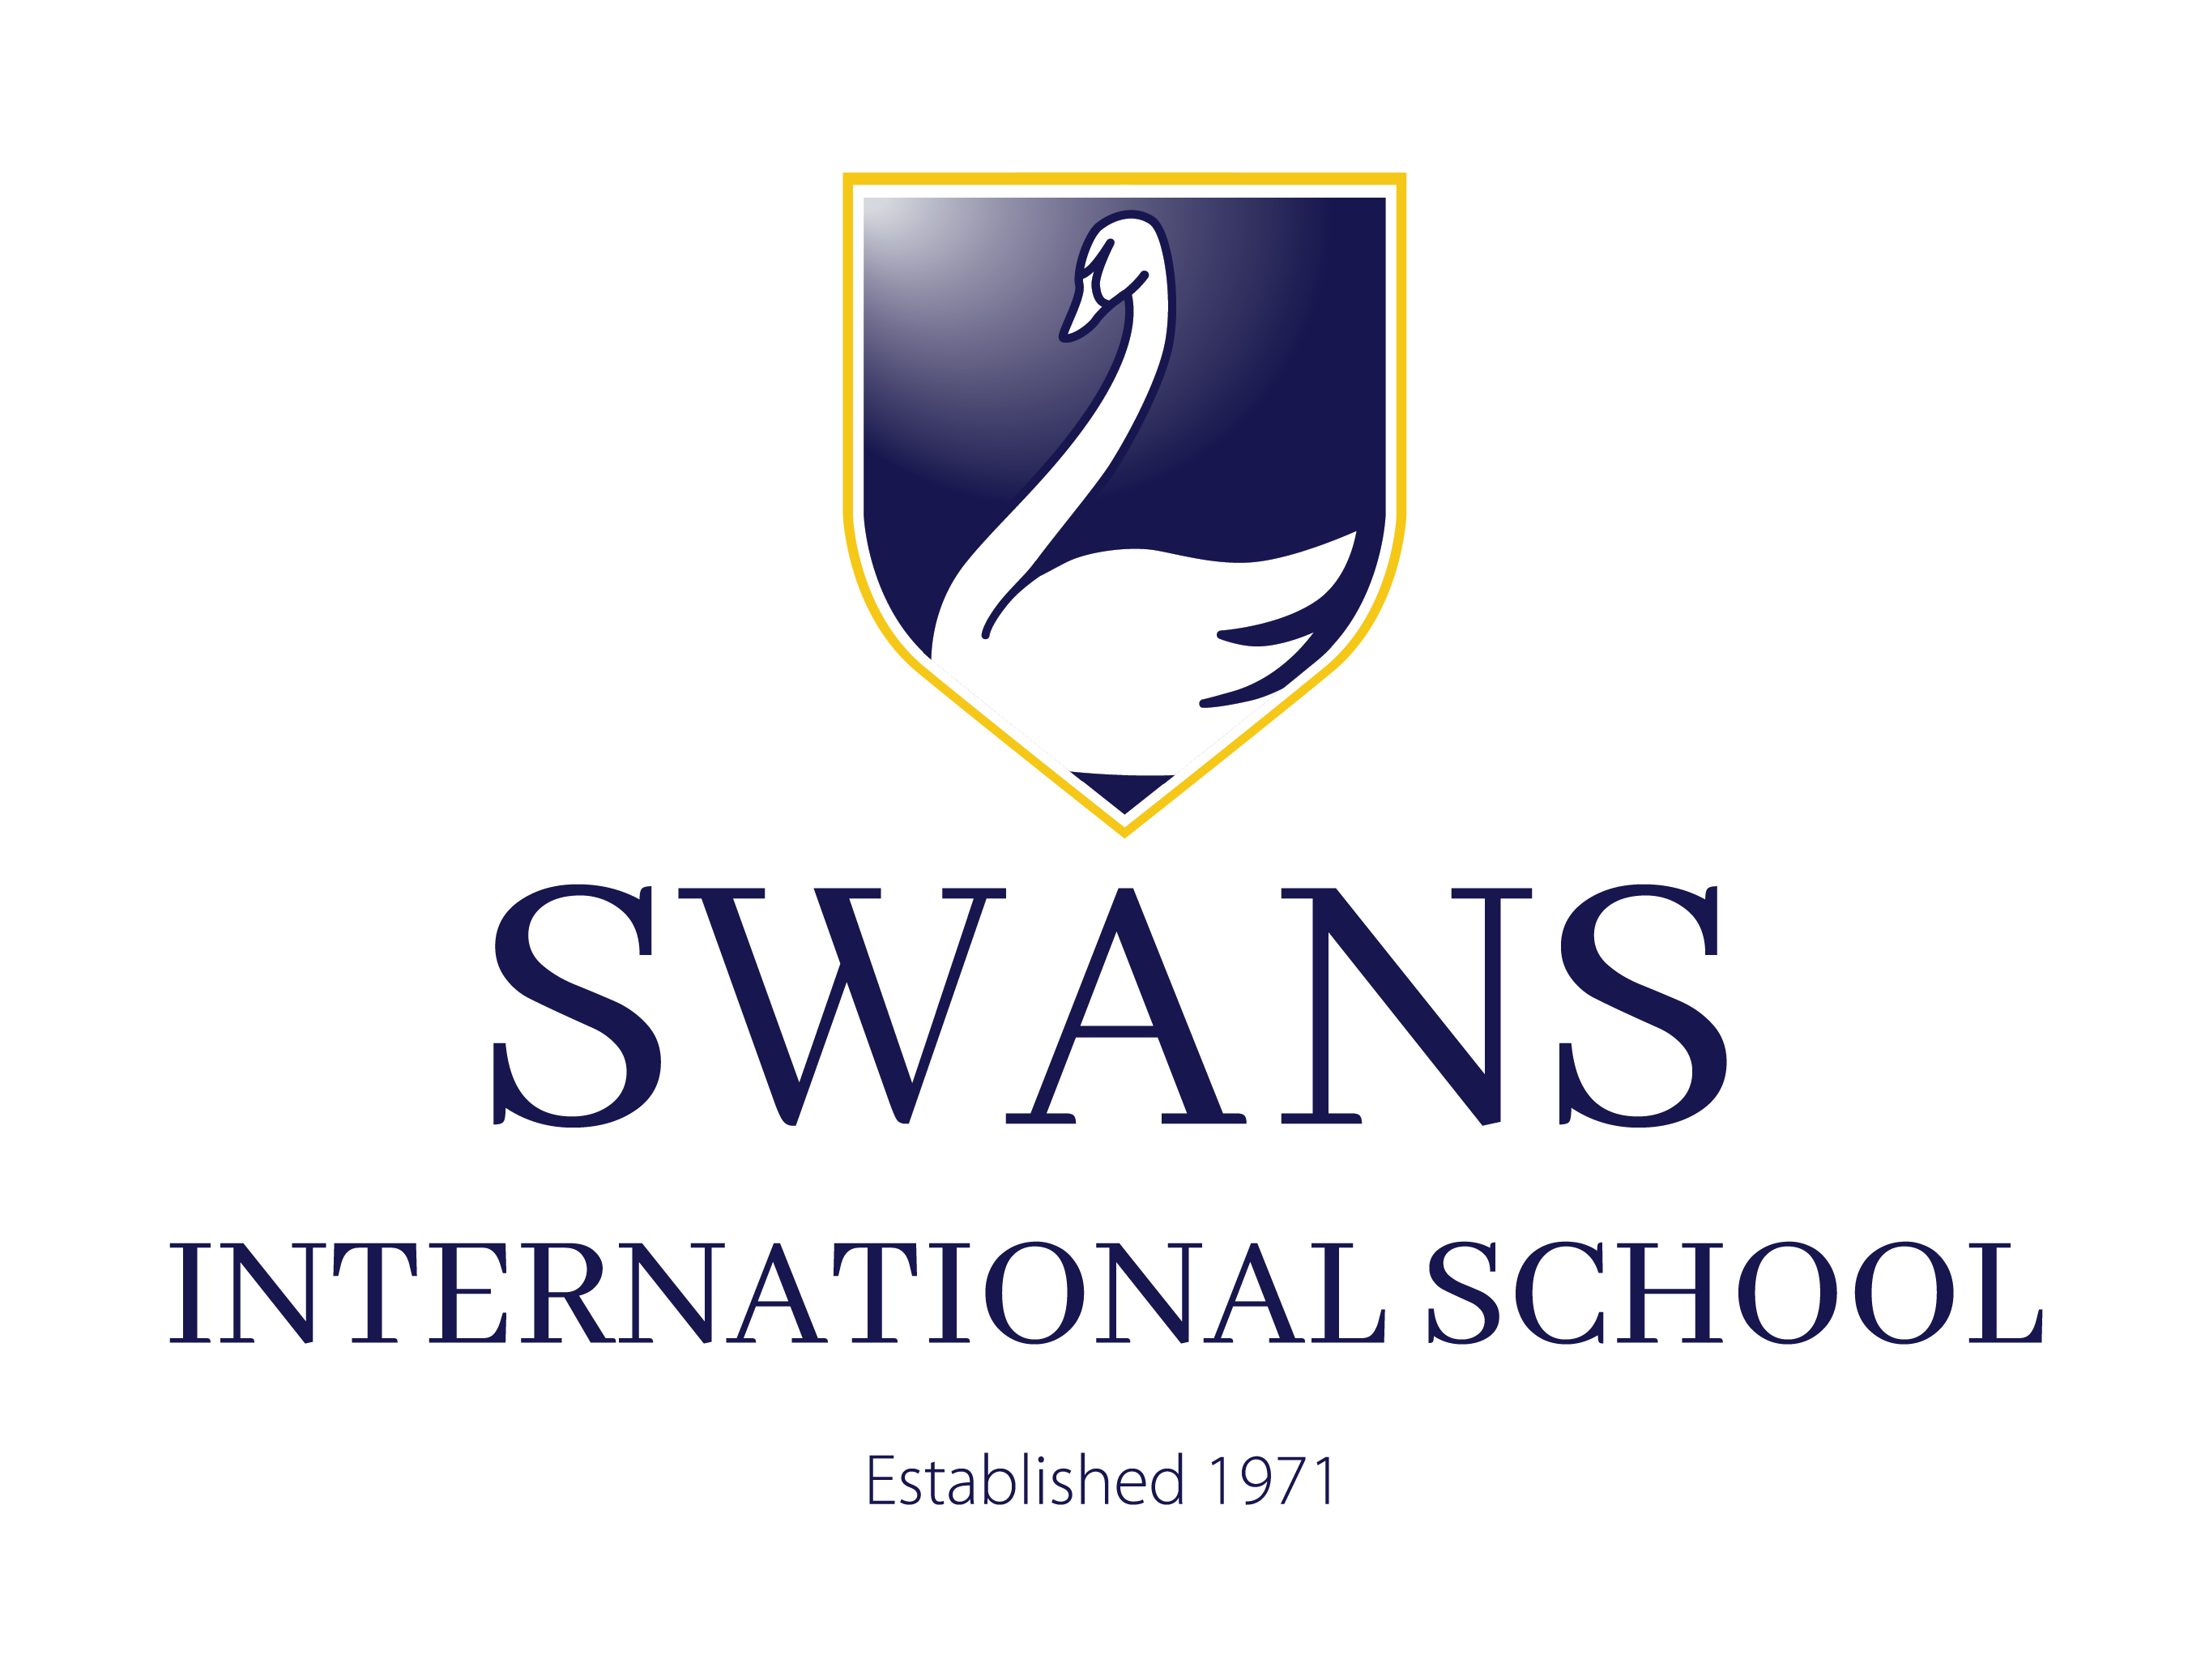 Swans international school logo